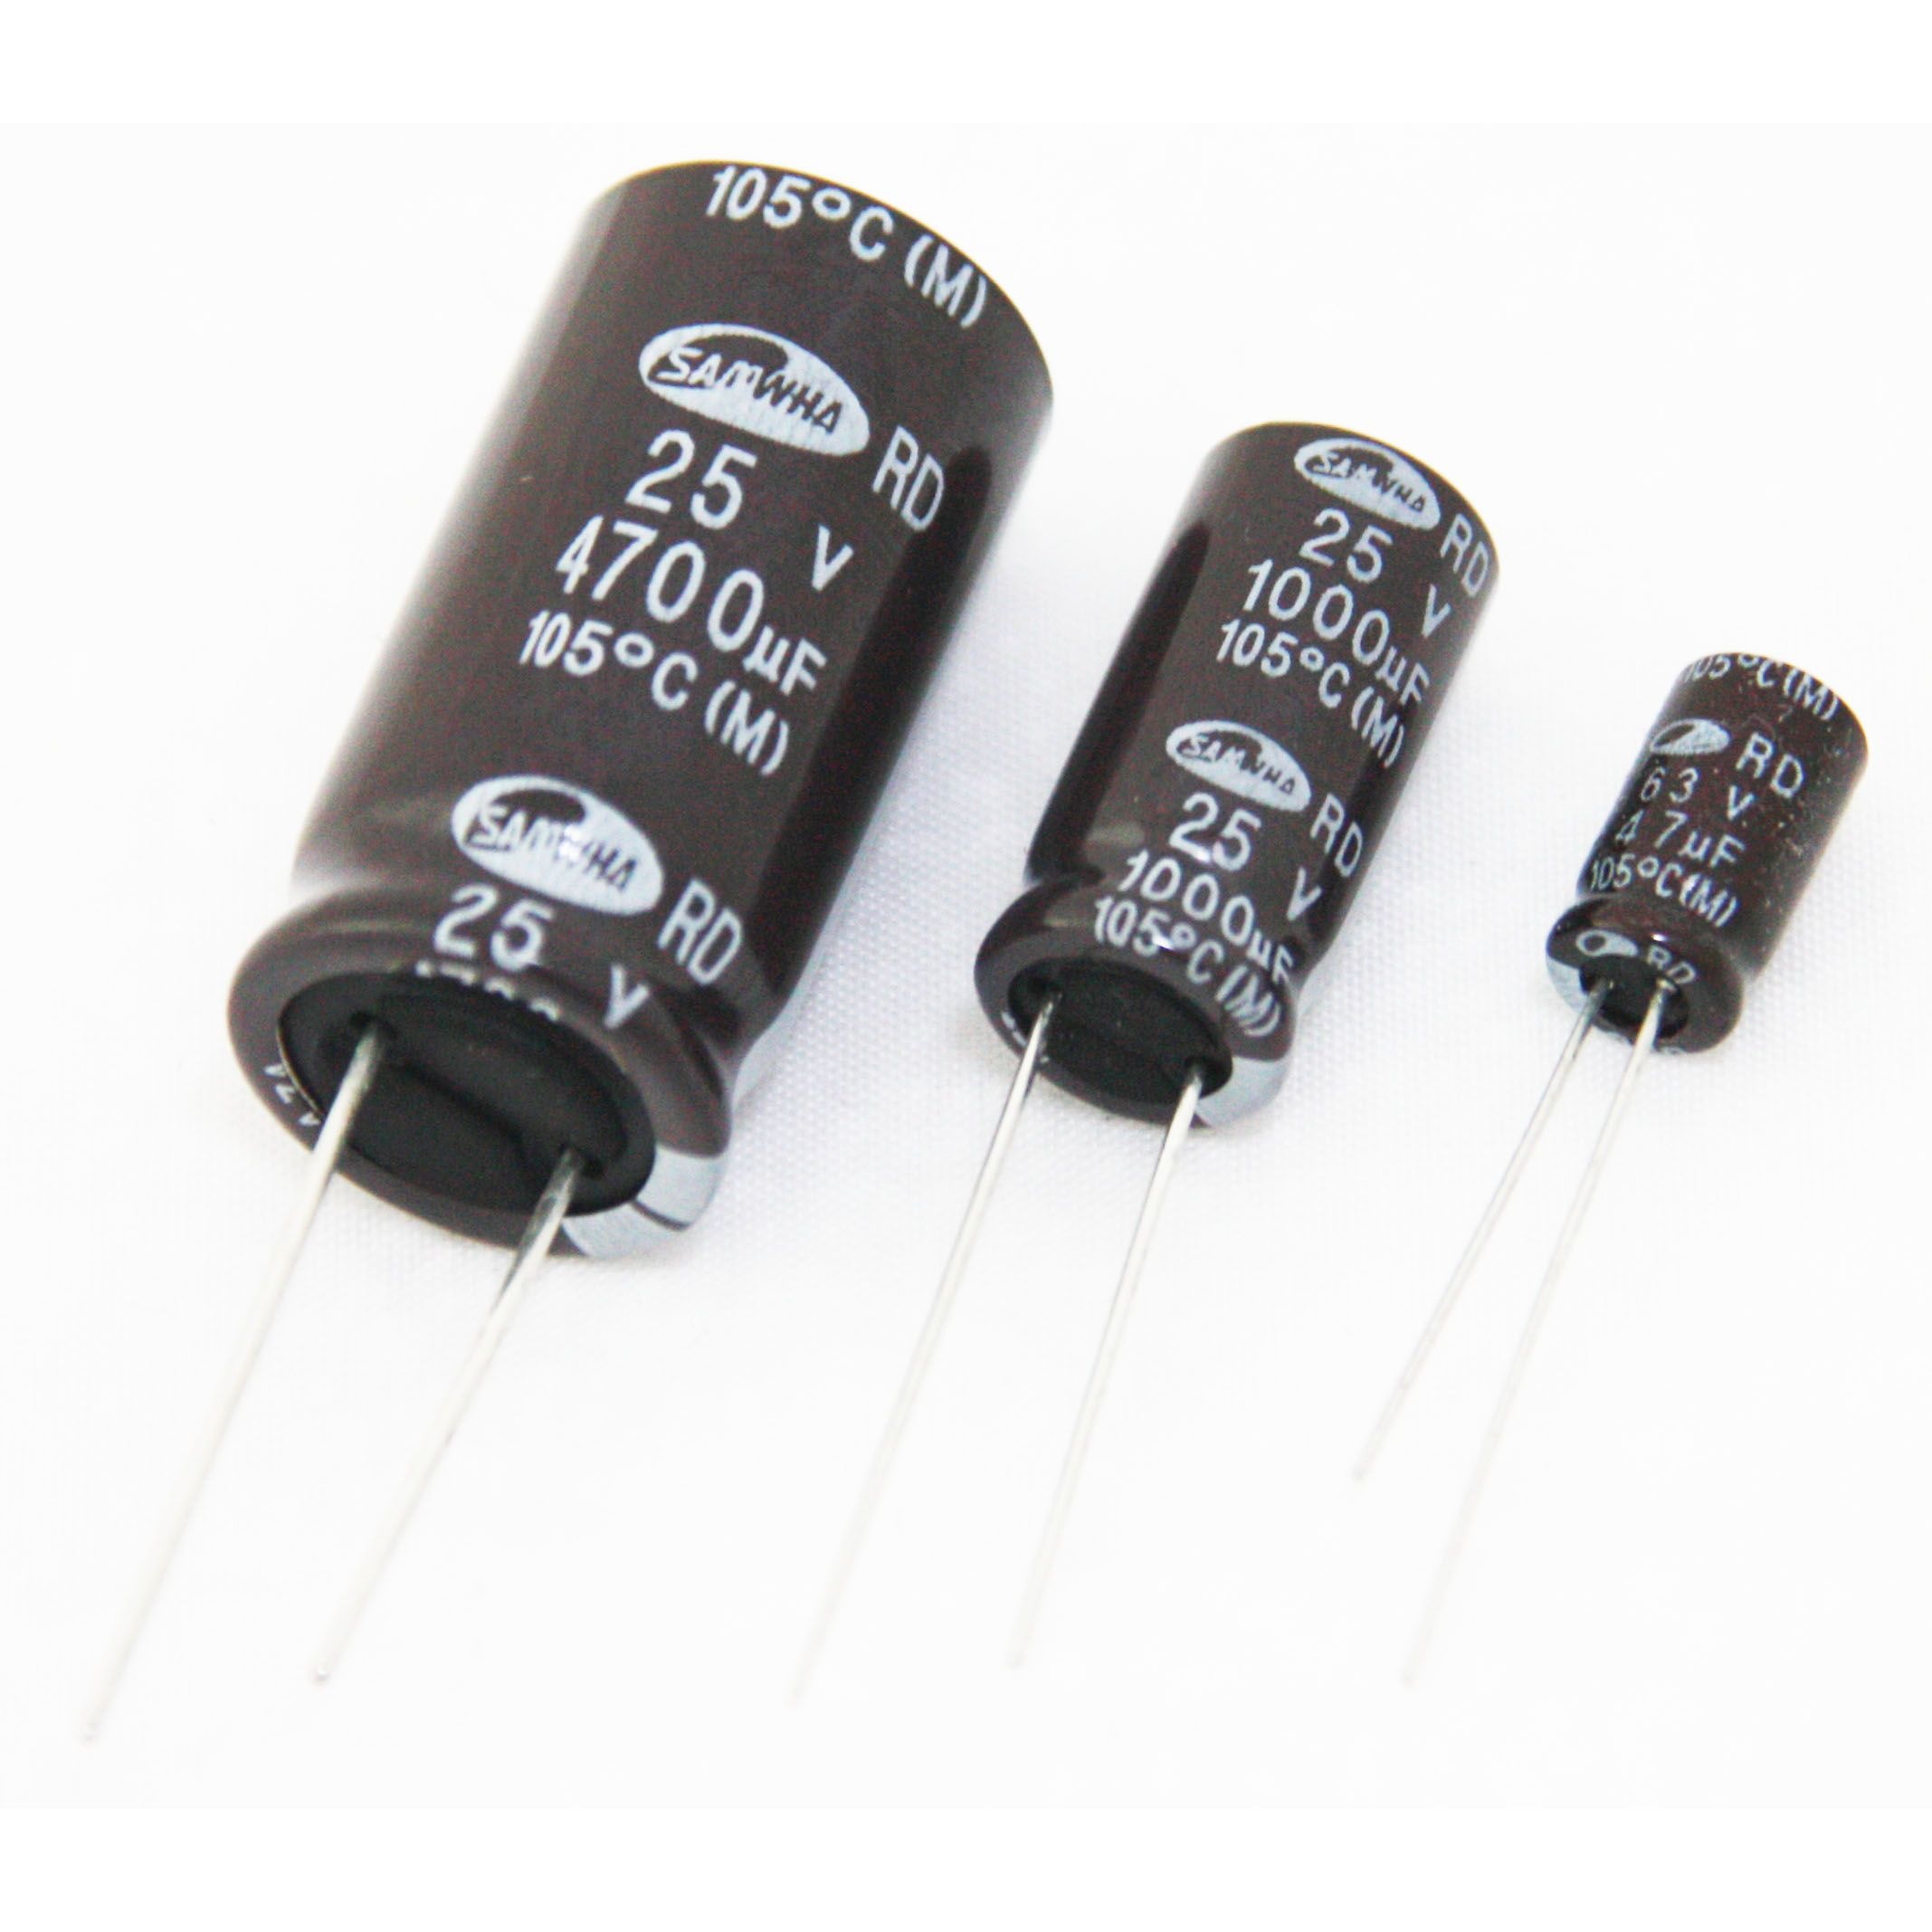 Electrolytic capacitor 105° 4700uF-63V